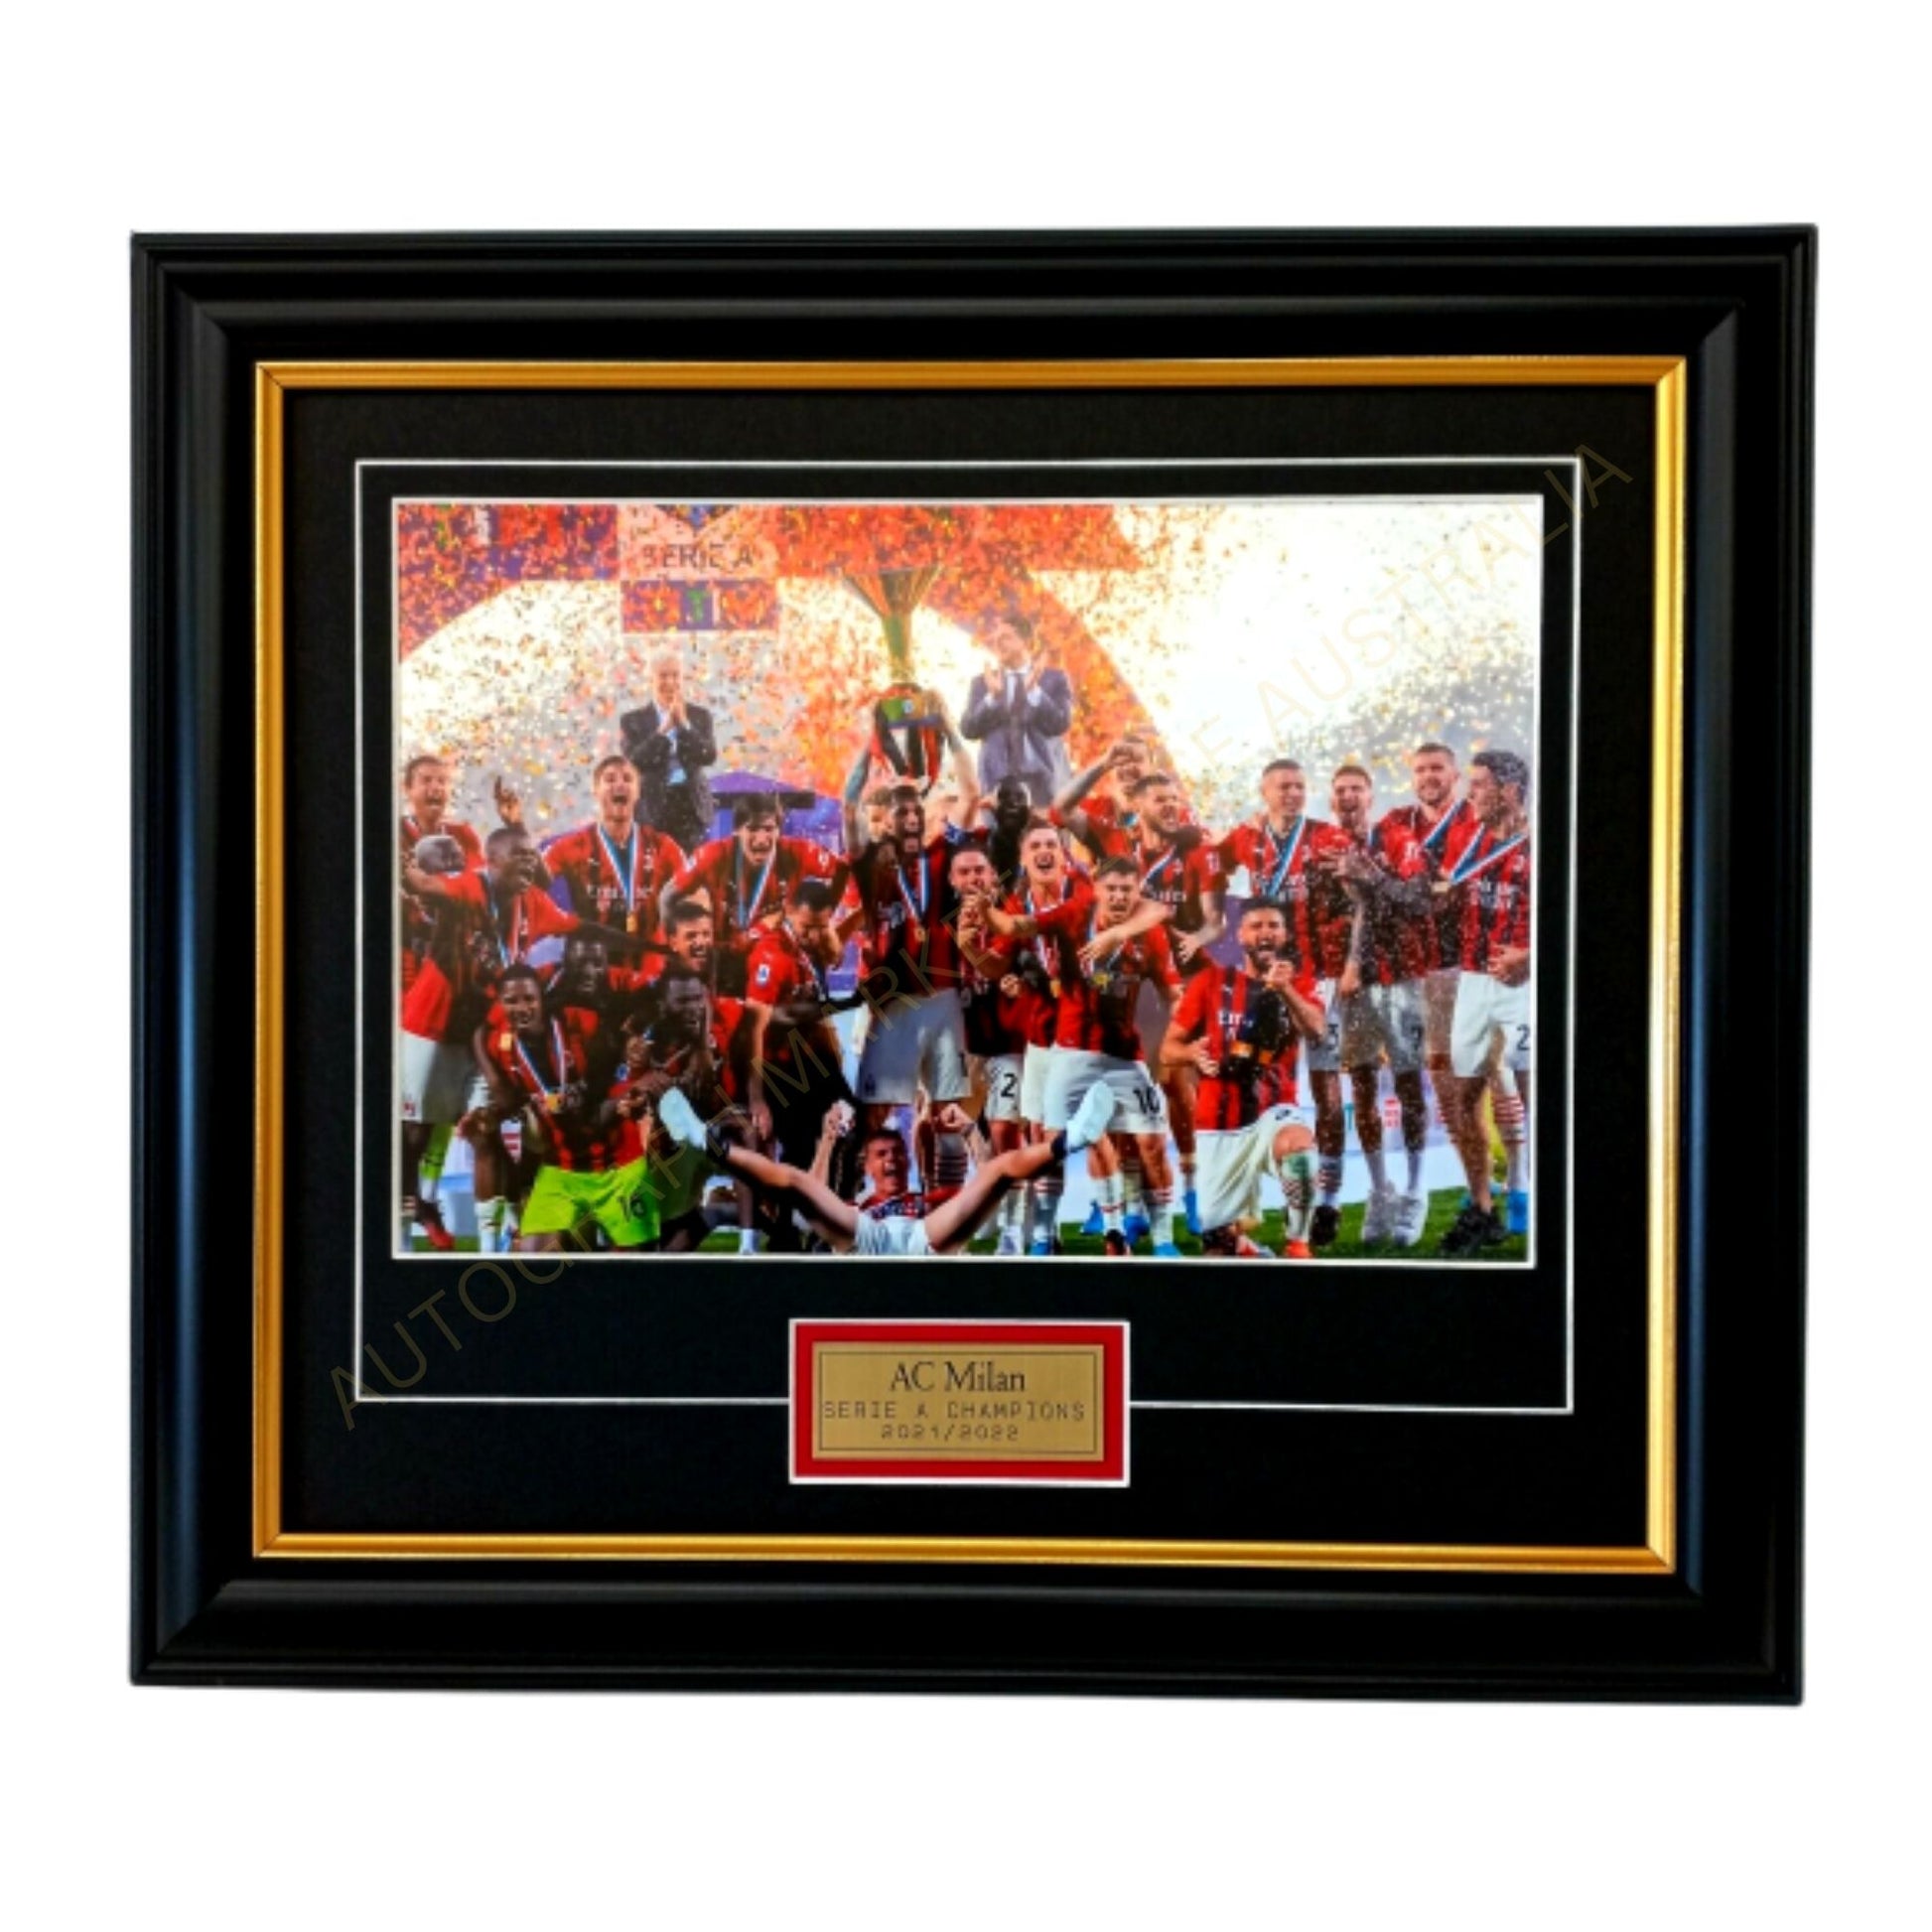 AC Milan Serie A Champions Celebration Framed Photo - Italian Champions